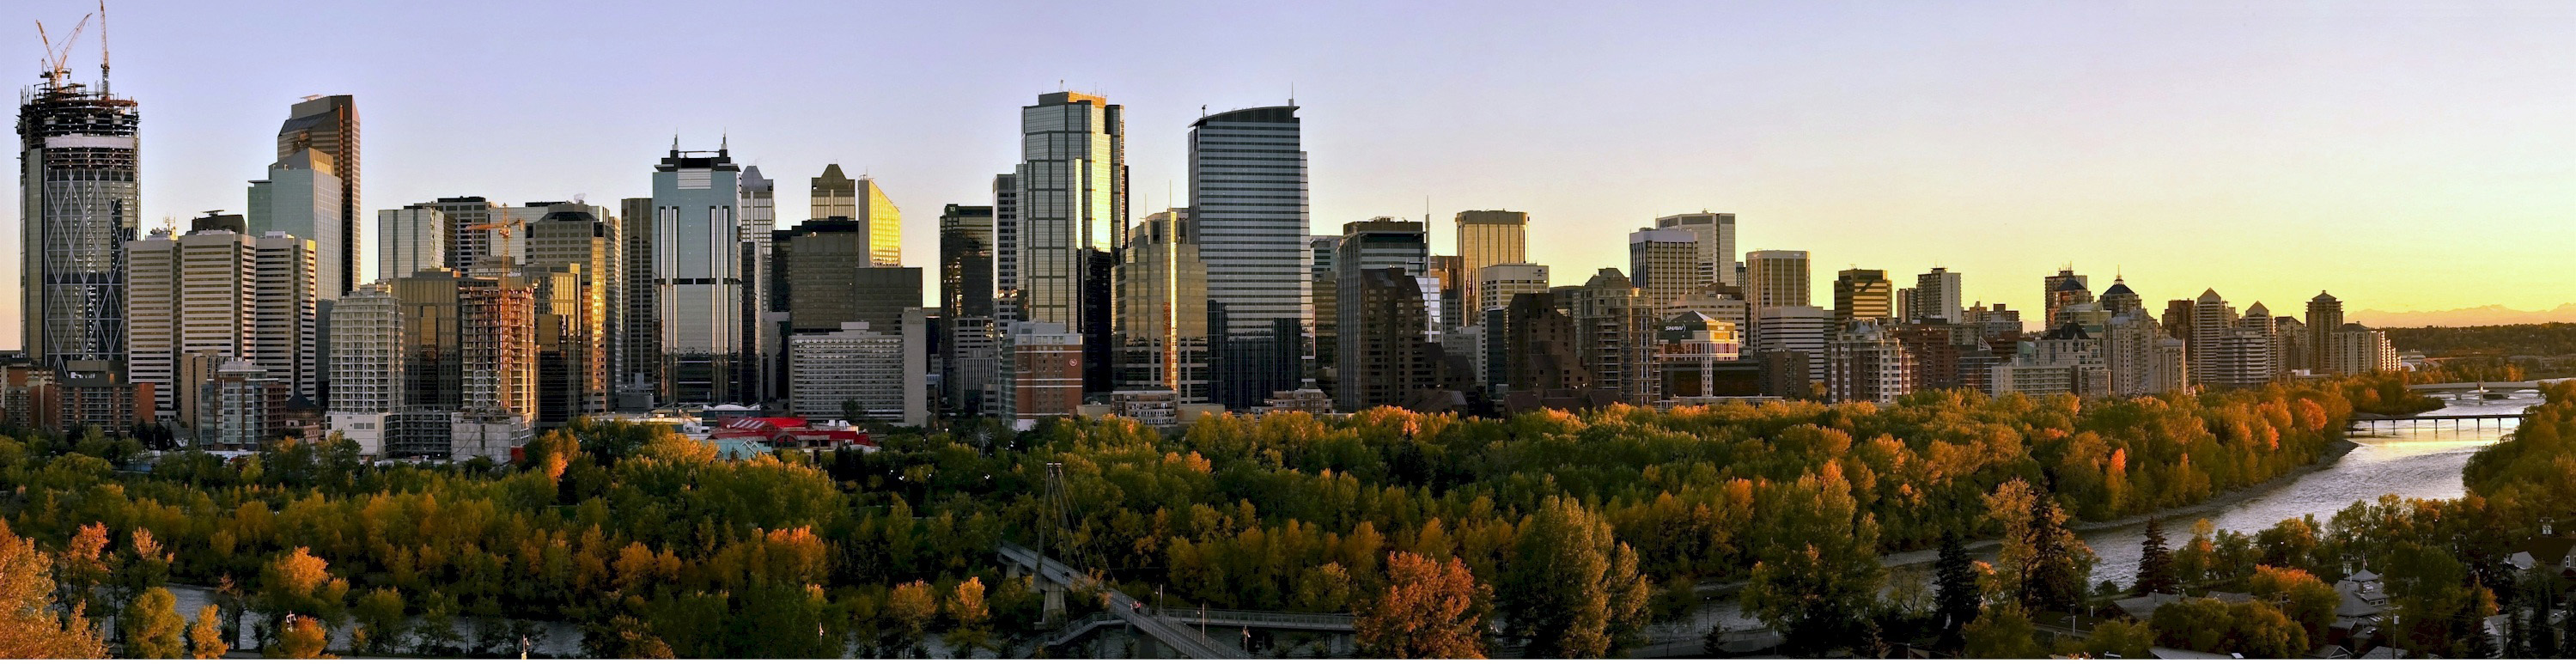 Skyline Landscape at Sunset in Calgary, Alberta, Canada image - Free ...